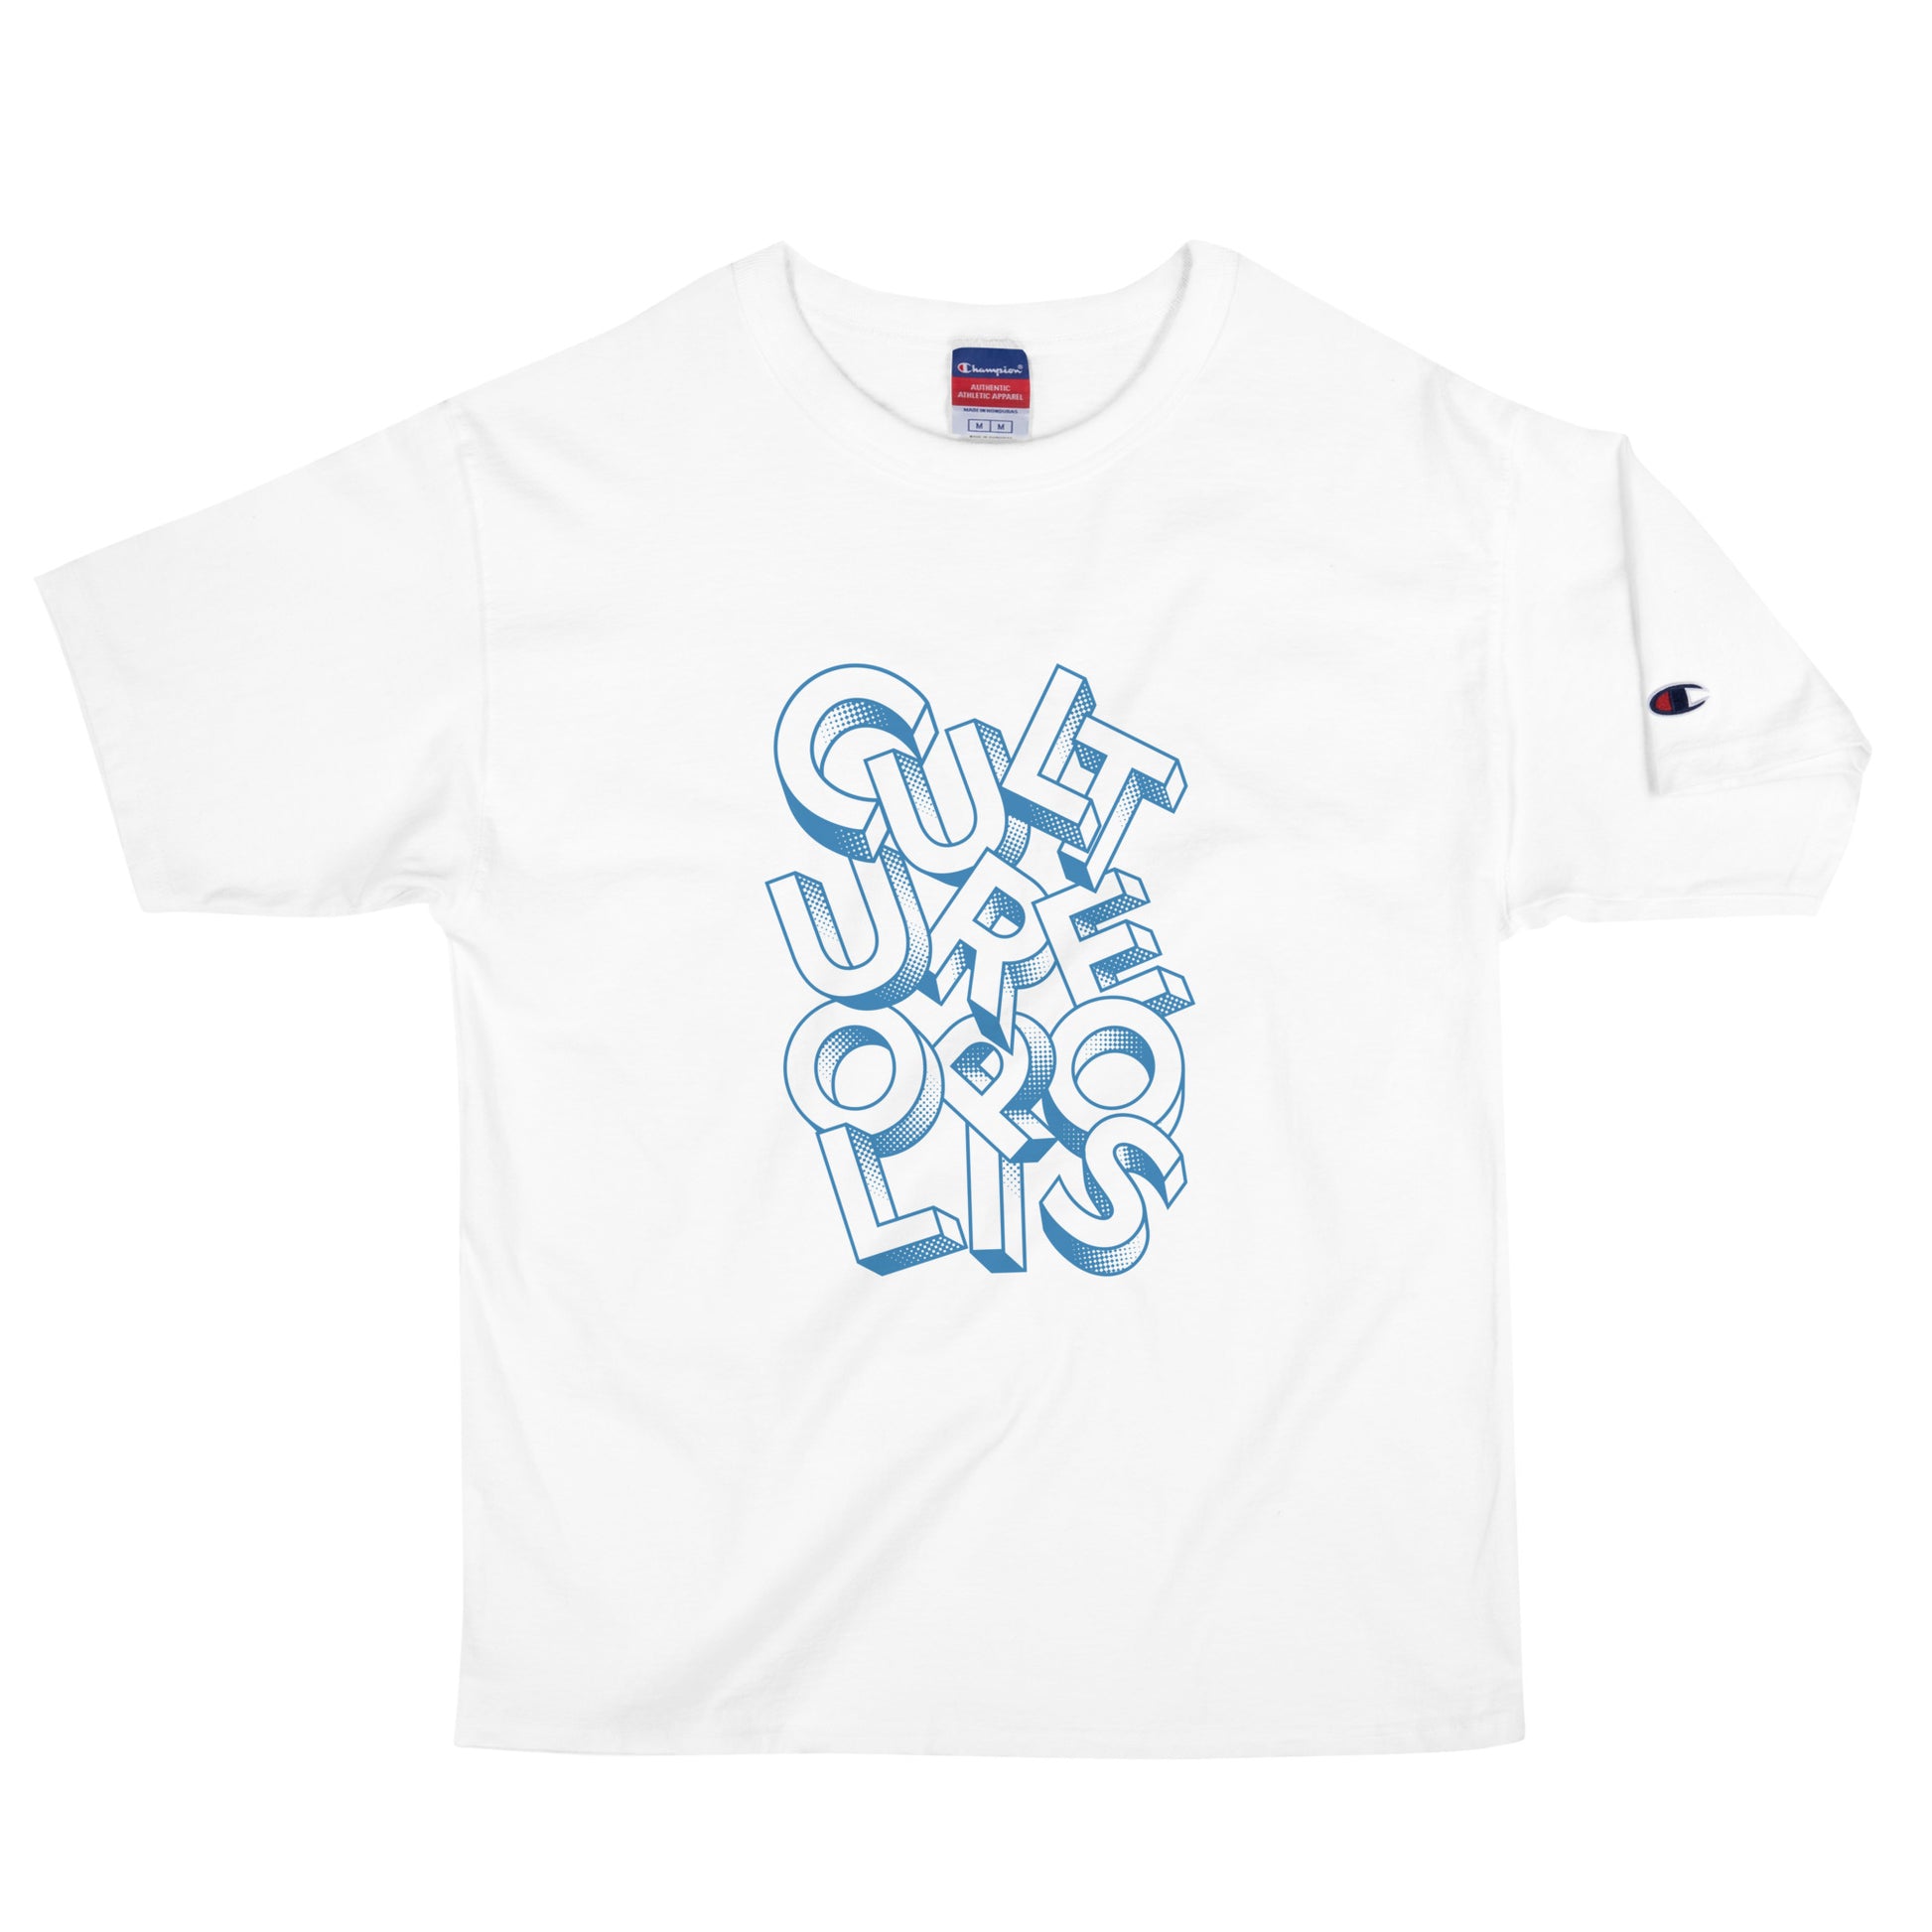 Champion T-Shirt – 3D Stack – Cultureopolis